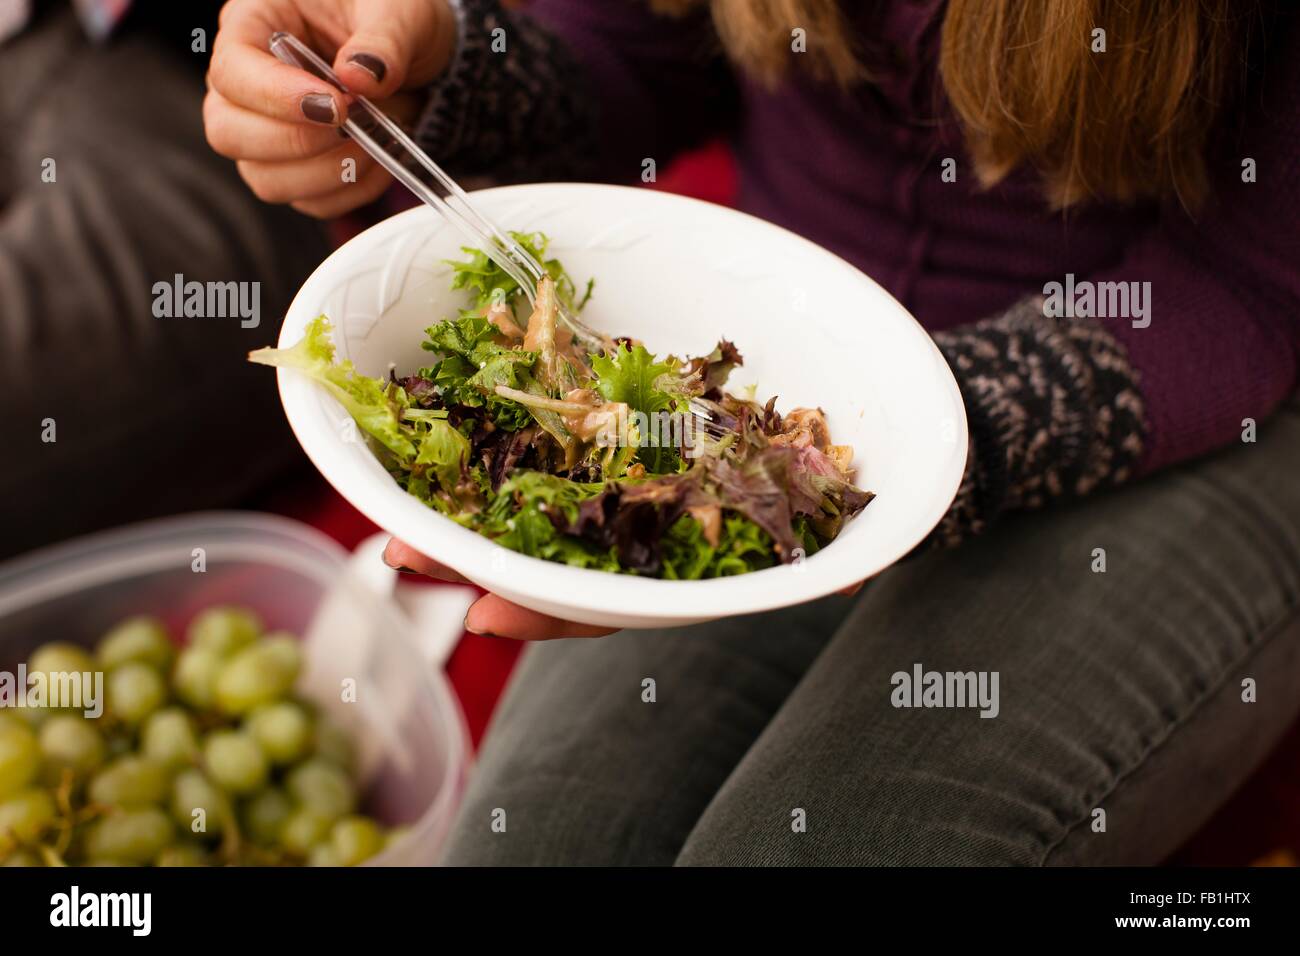 Aufnahme des jungen Paares Picknick Salat essen beschnitten Stockfoto